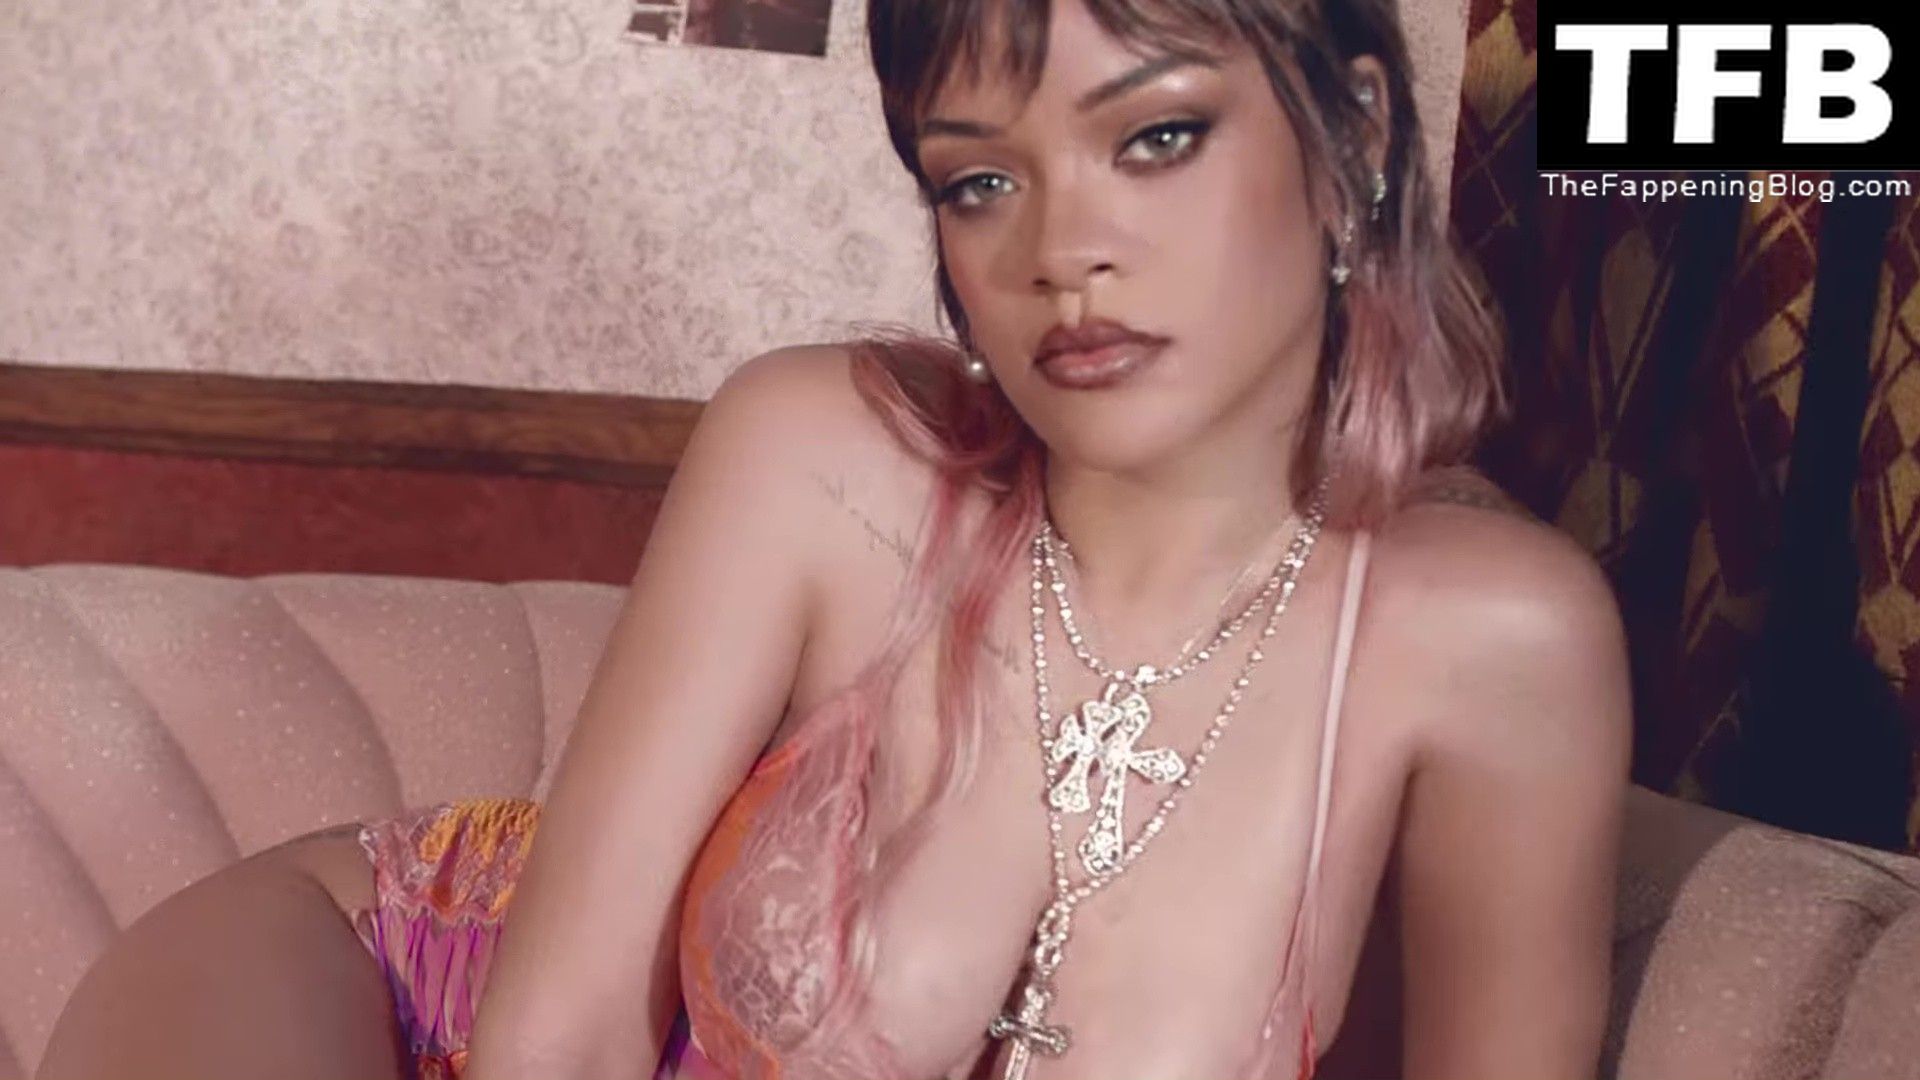 Rihanna-Gorgeous-Body-in-Lingerie-2-1-thefappeningblog.com_.jpg